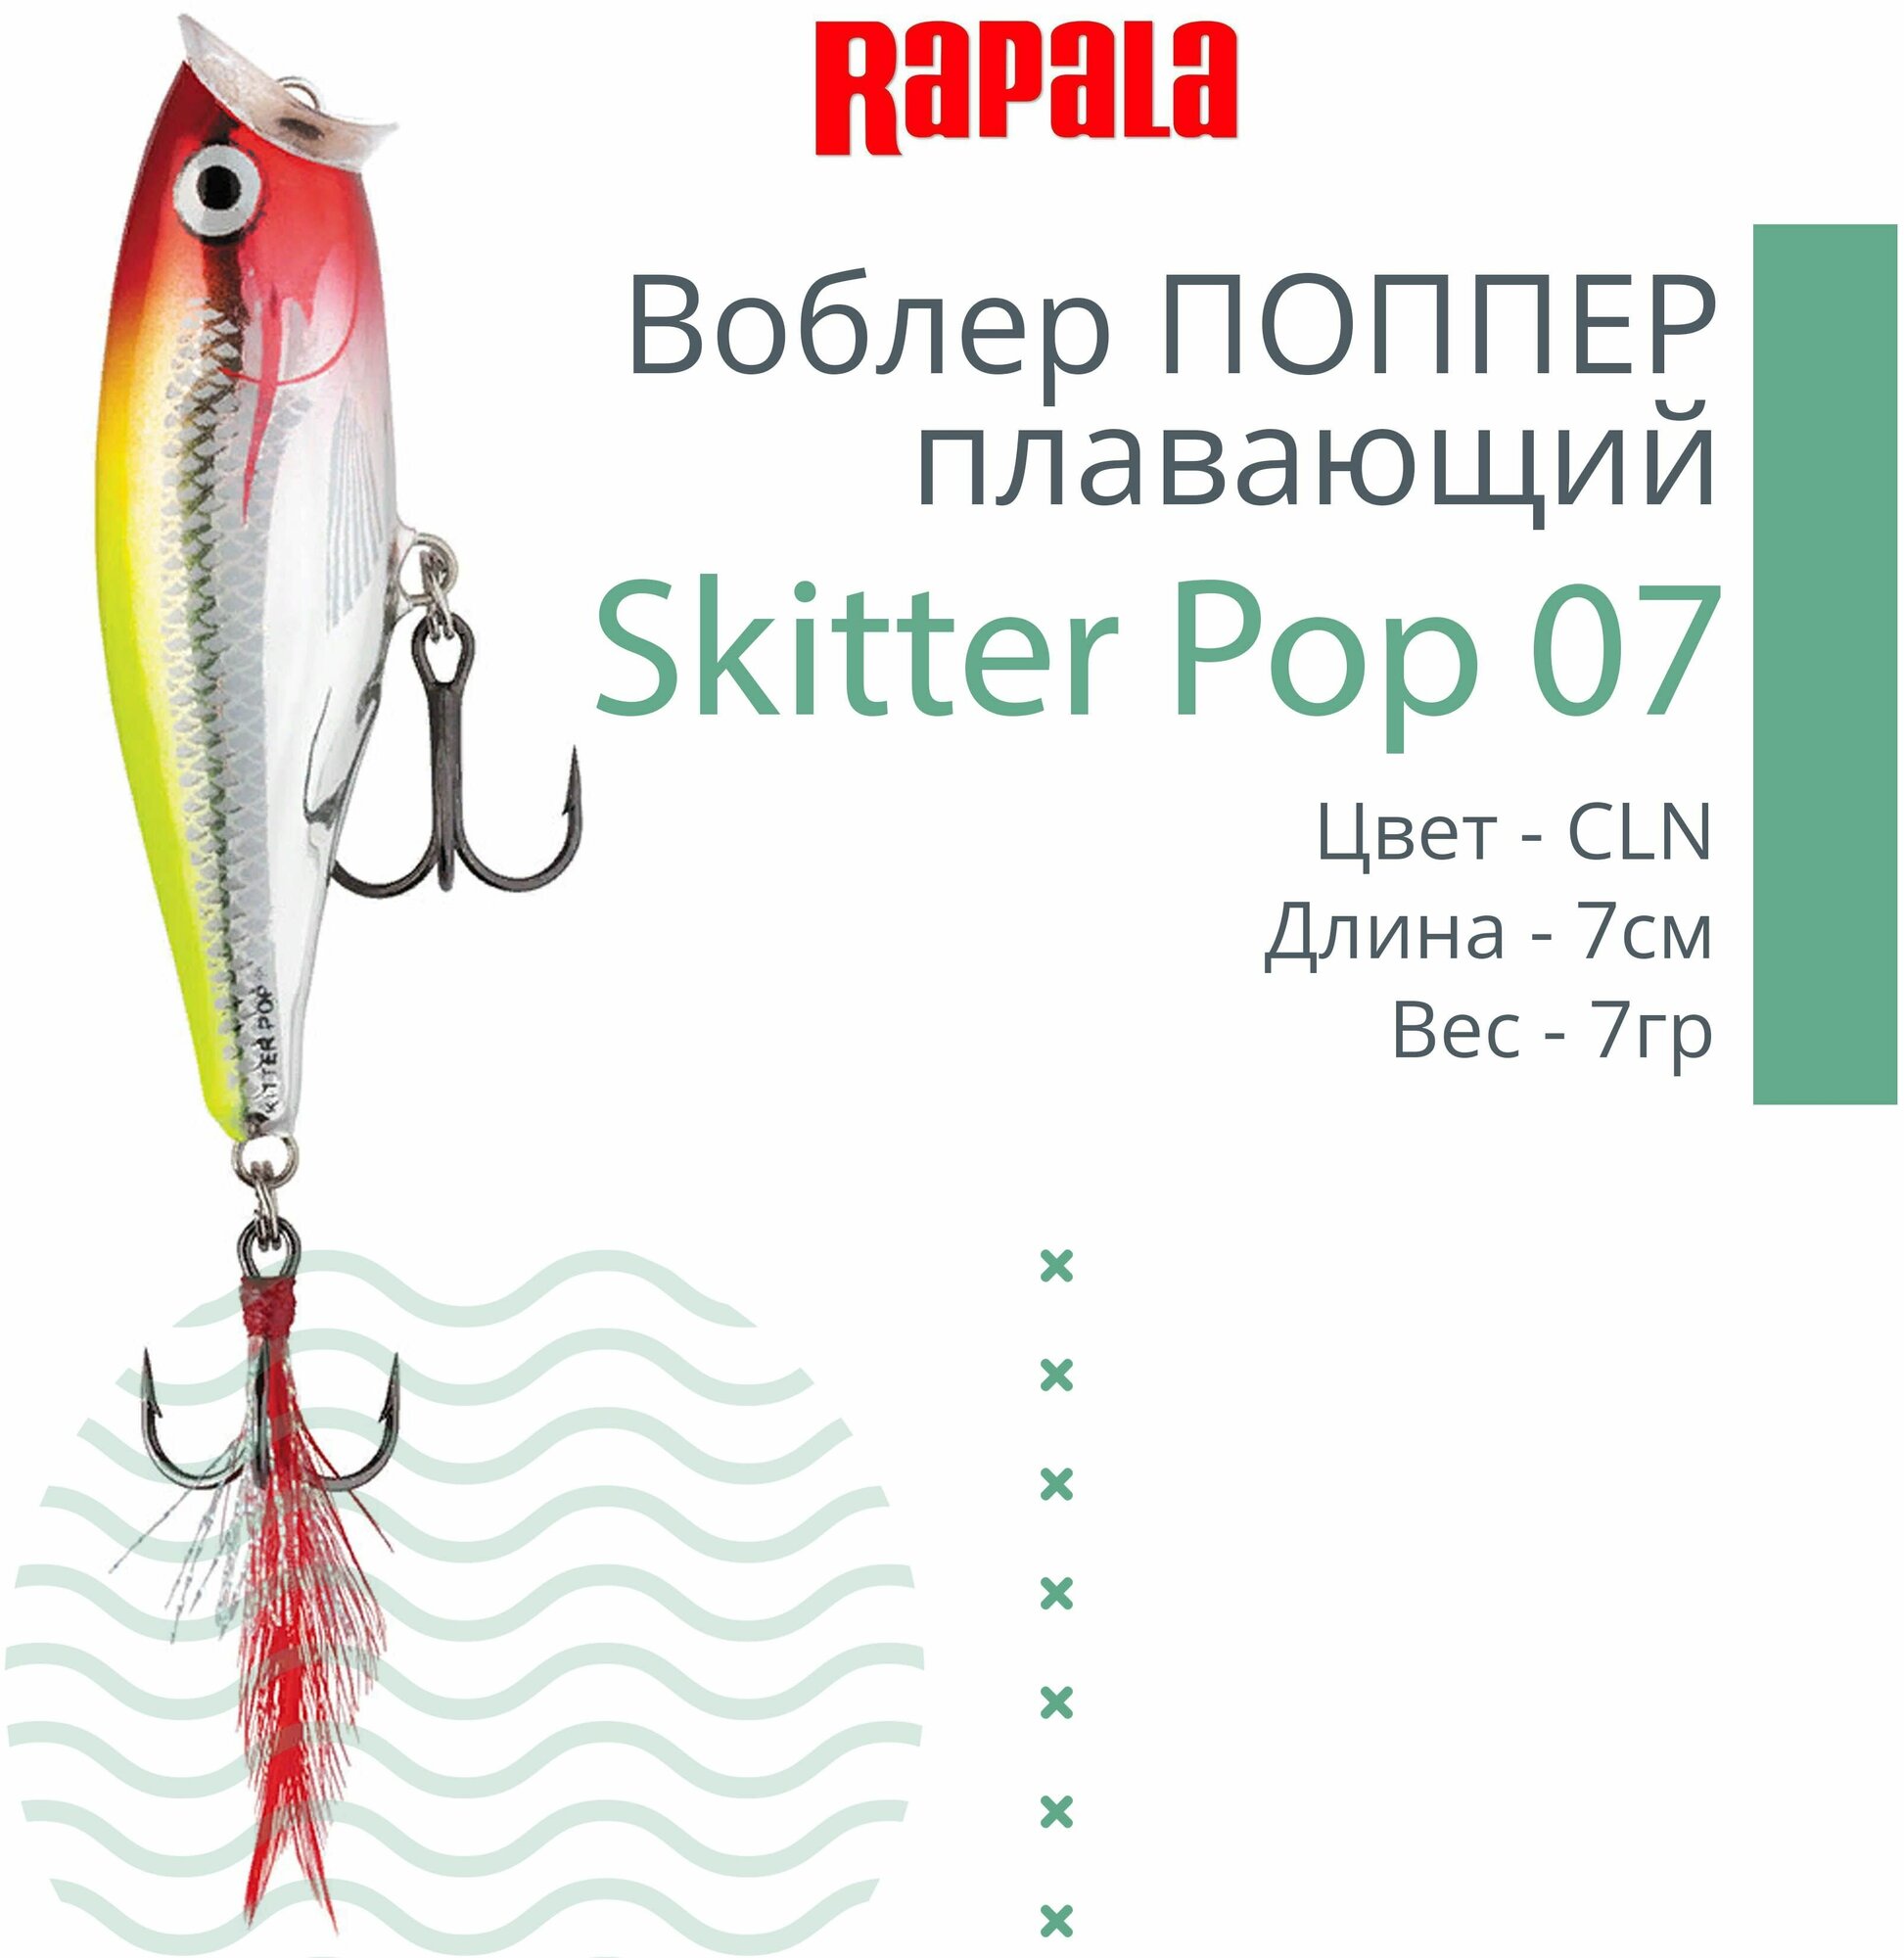 Воблер для рыбалки RAPALA Skitter Pop 07, 7см, 7гр, цвет CLN, плавающий